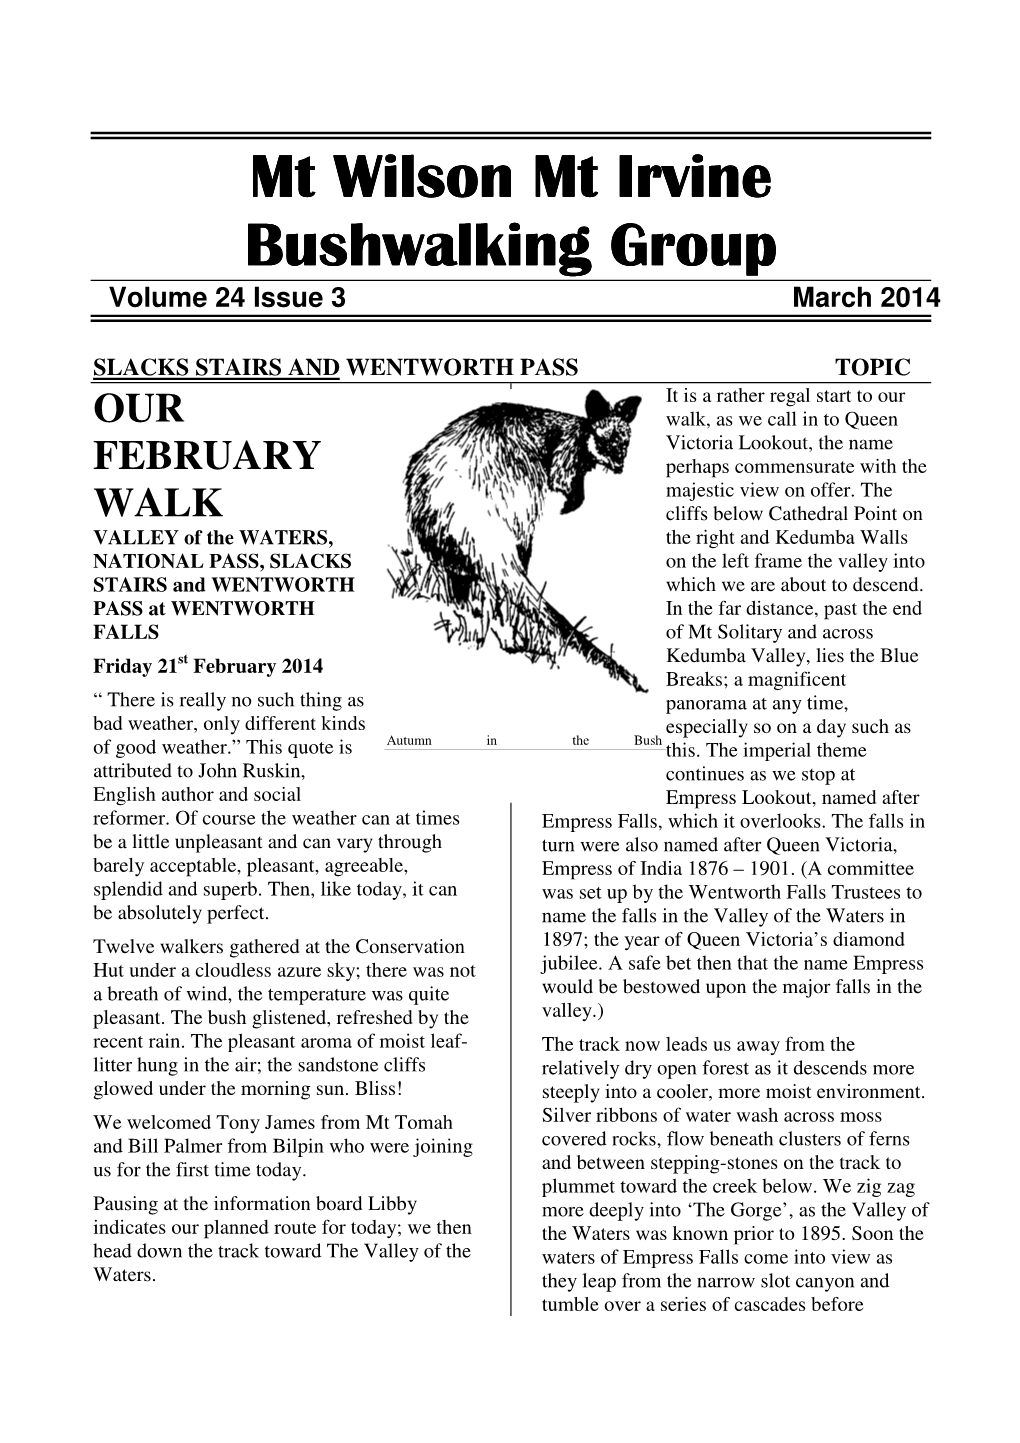 Mt Wilson Mt Irvine Bushwalking Group Volume 24 Issue 3 March 2014